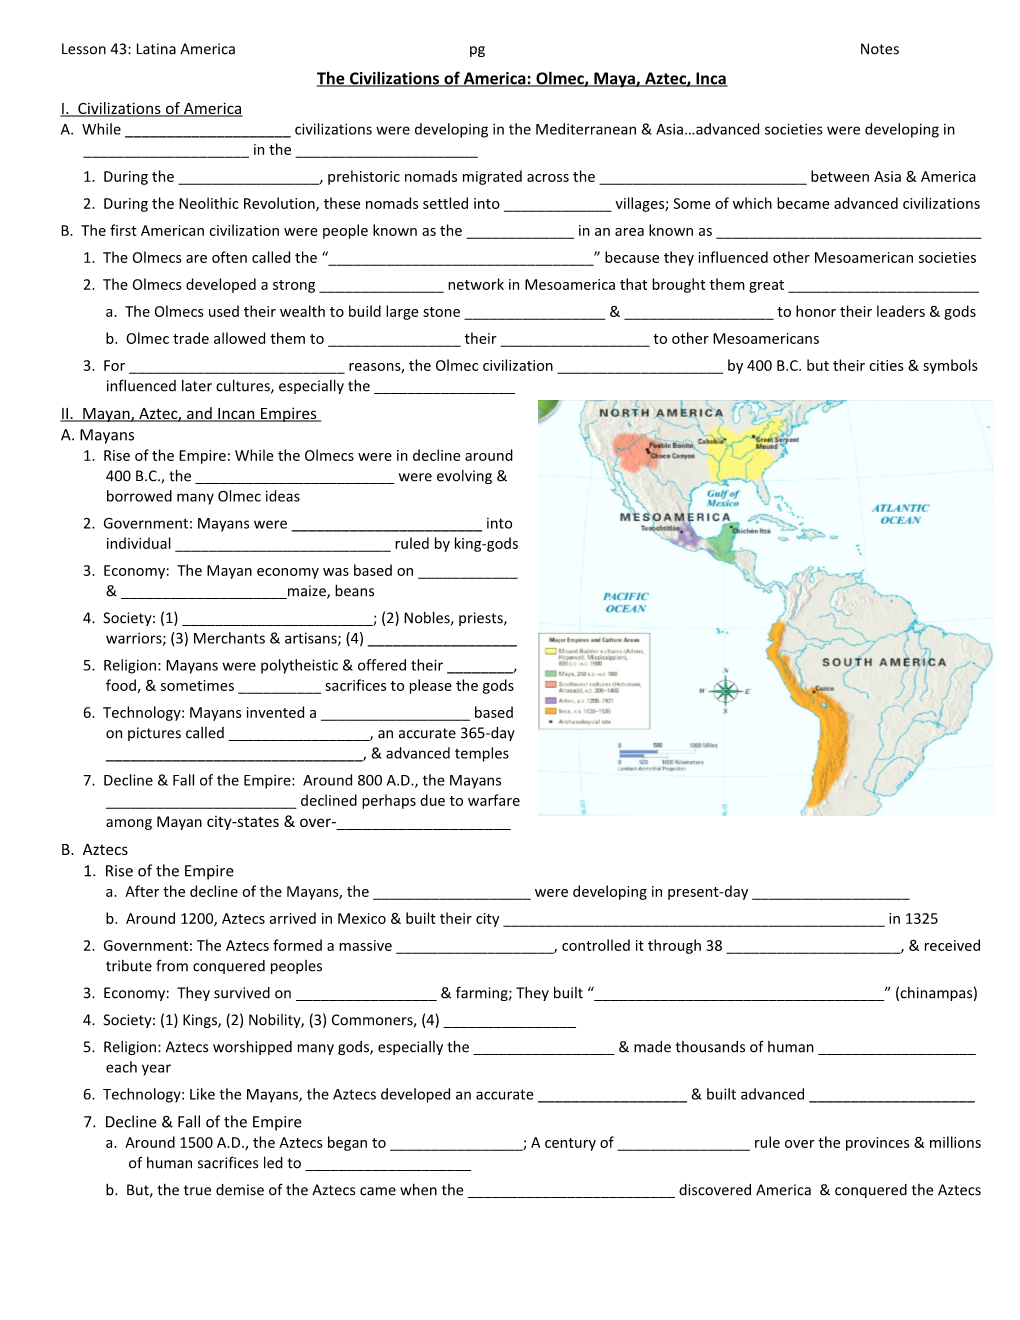 The Civilizations of America: Olmec, Maya, Aztec, Inca